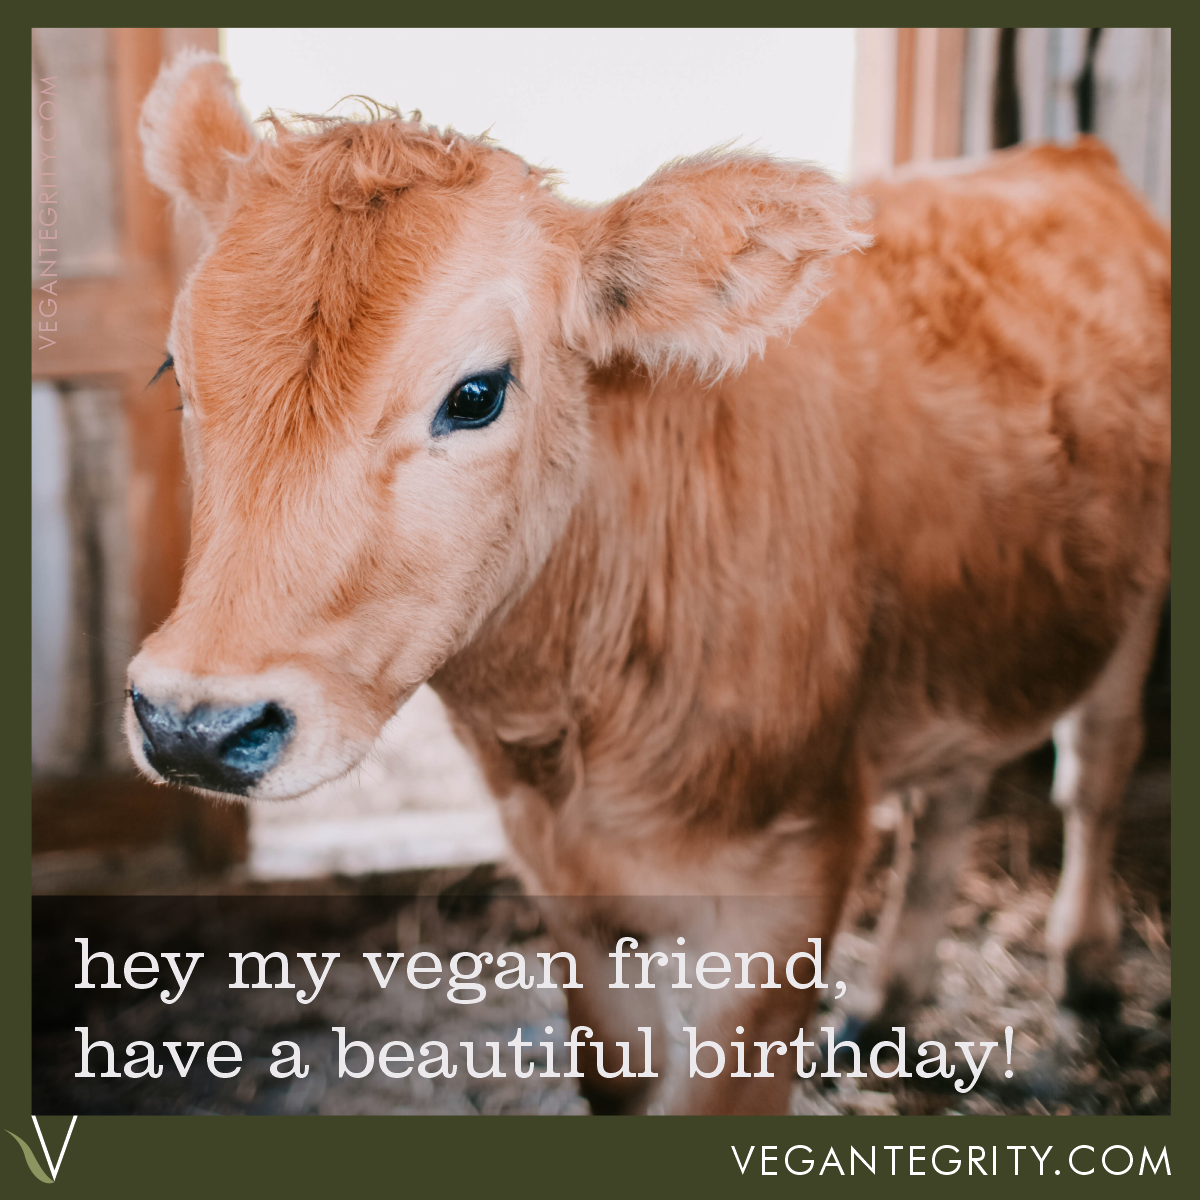 Sweet brown calf - hey my vegan friend, have a beautiful birthday.